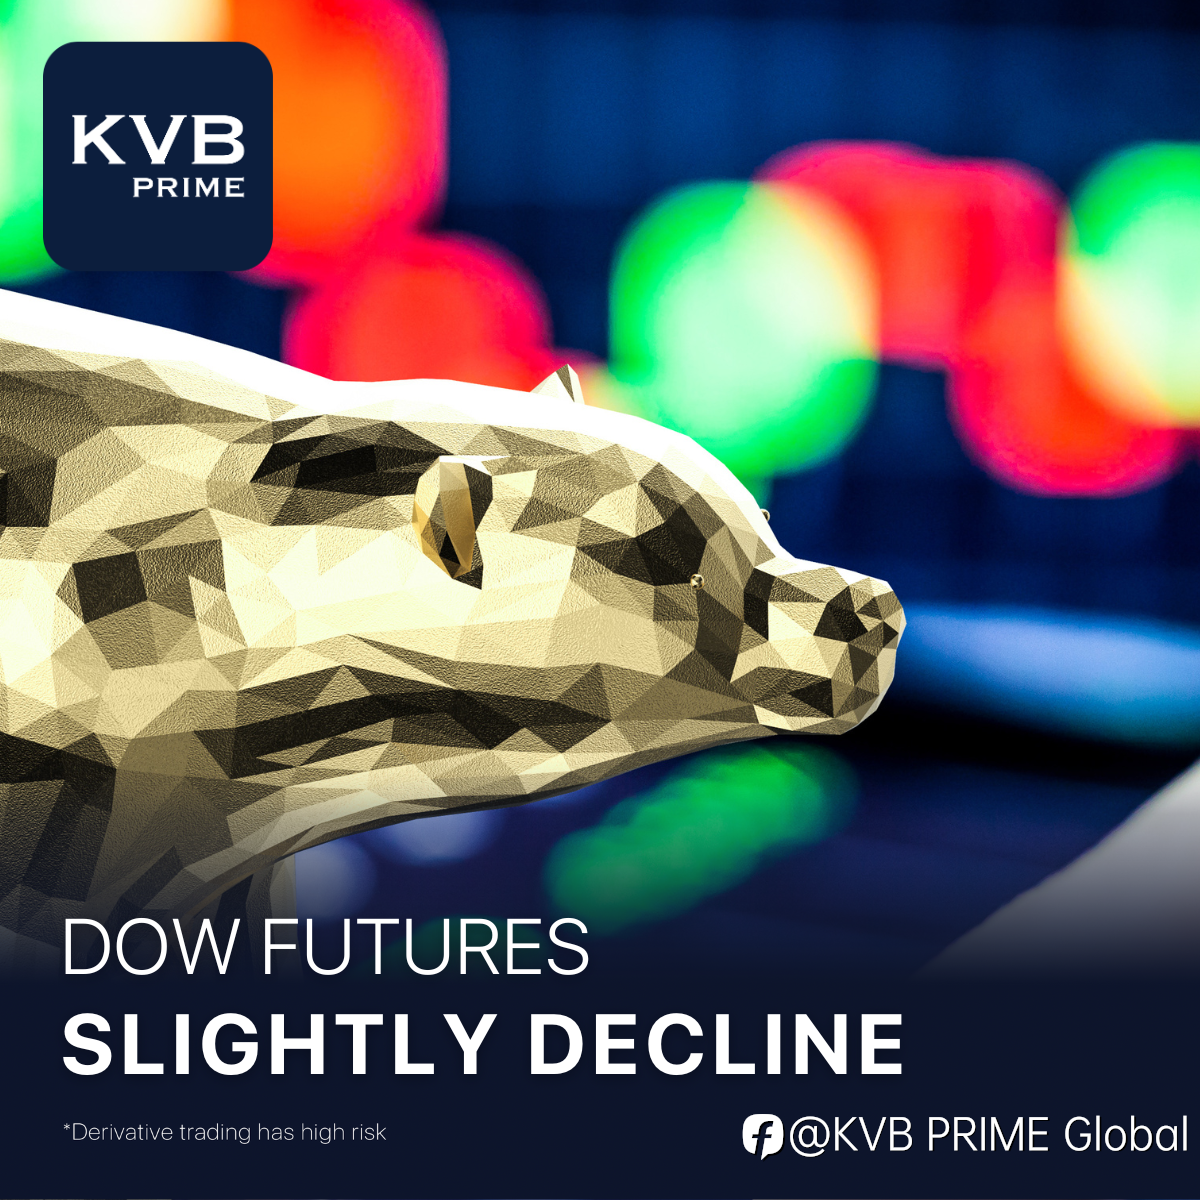 Dow futures slightly decline